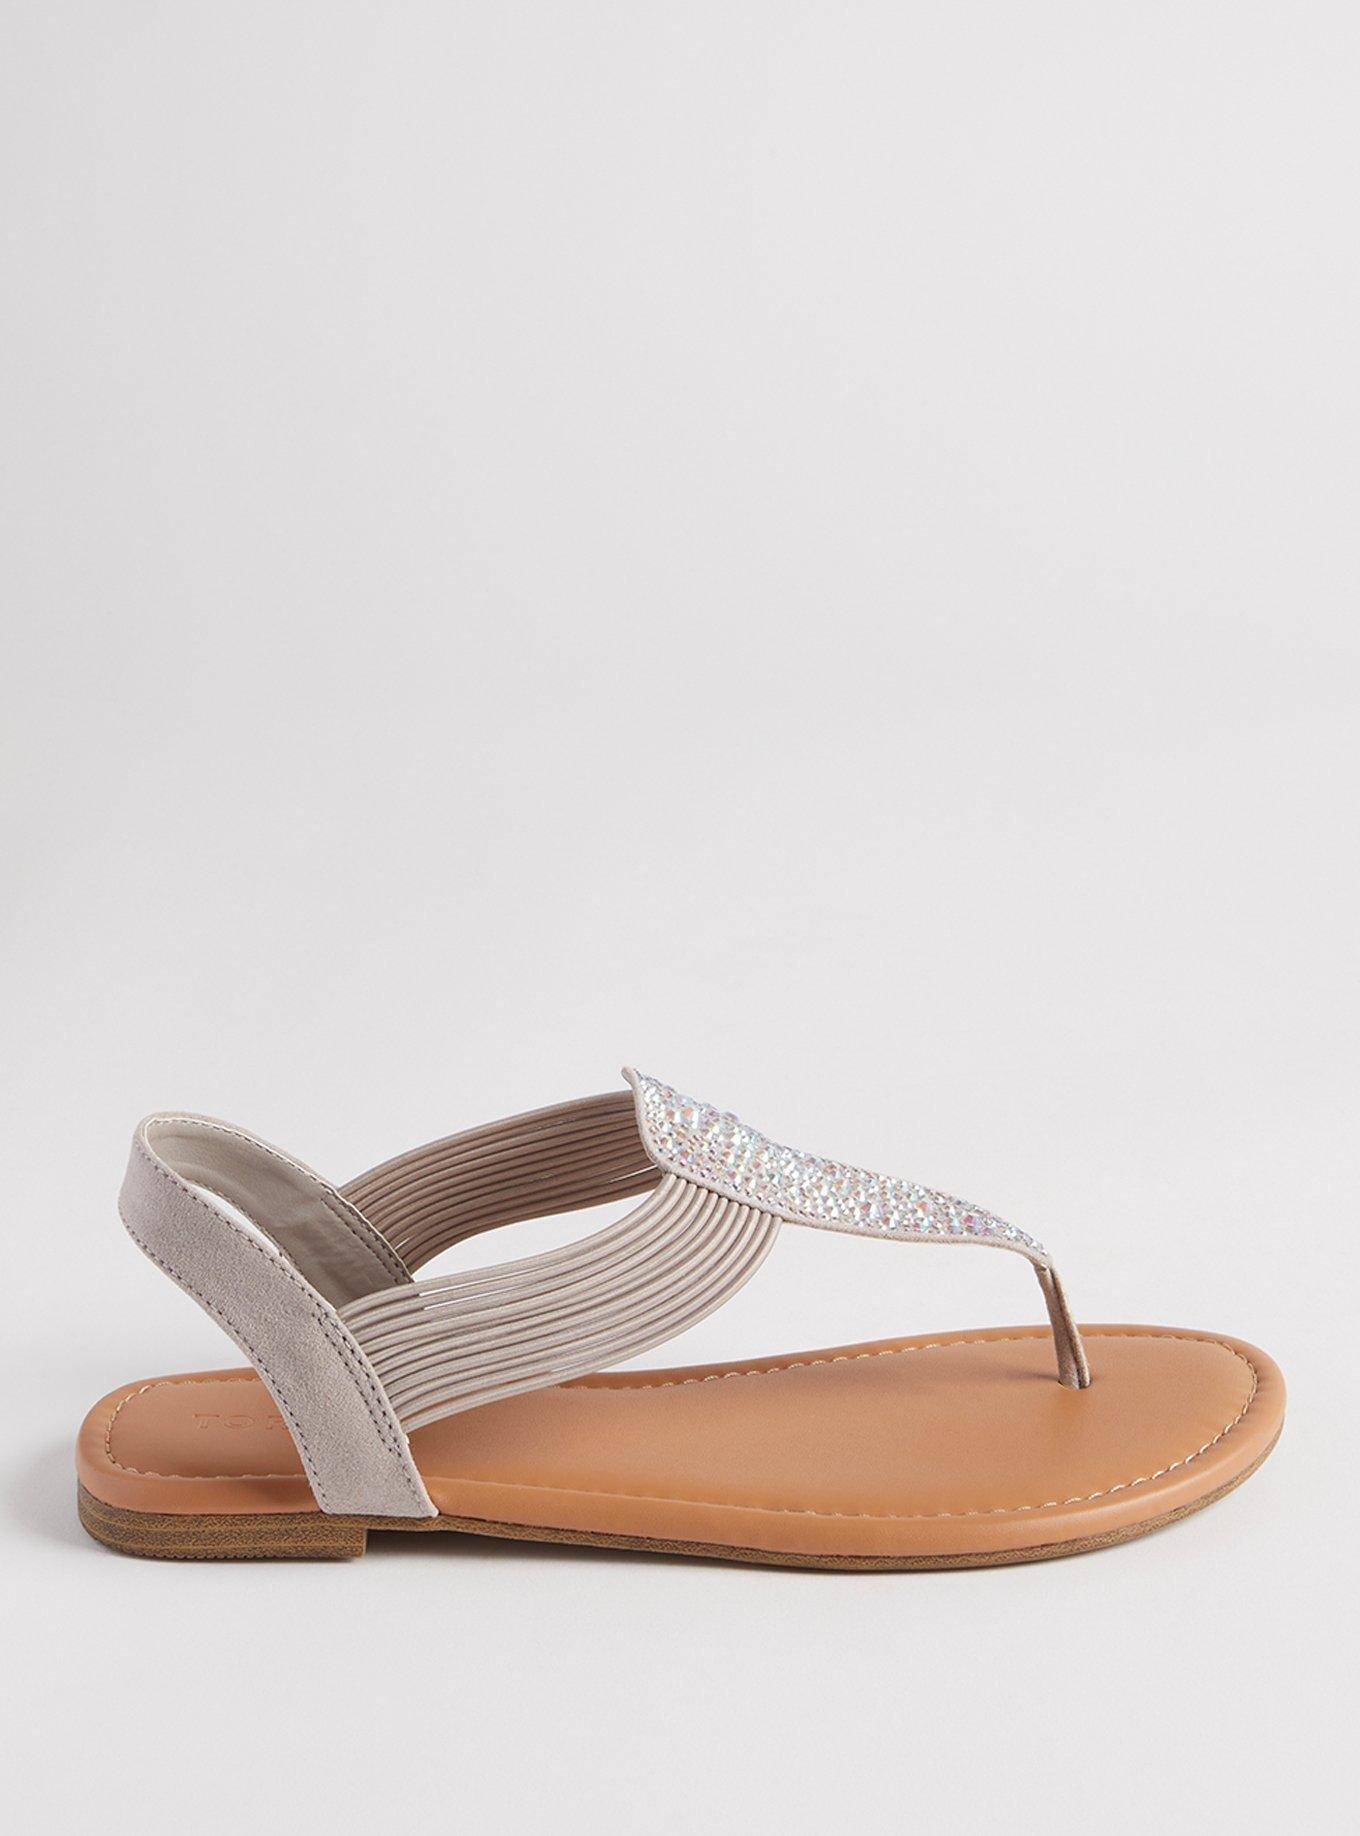 Plus Size - Gold Rhinestone T-Strap Sandal (Wide Width) - Torrid